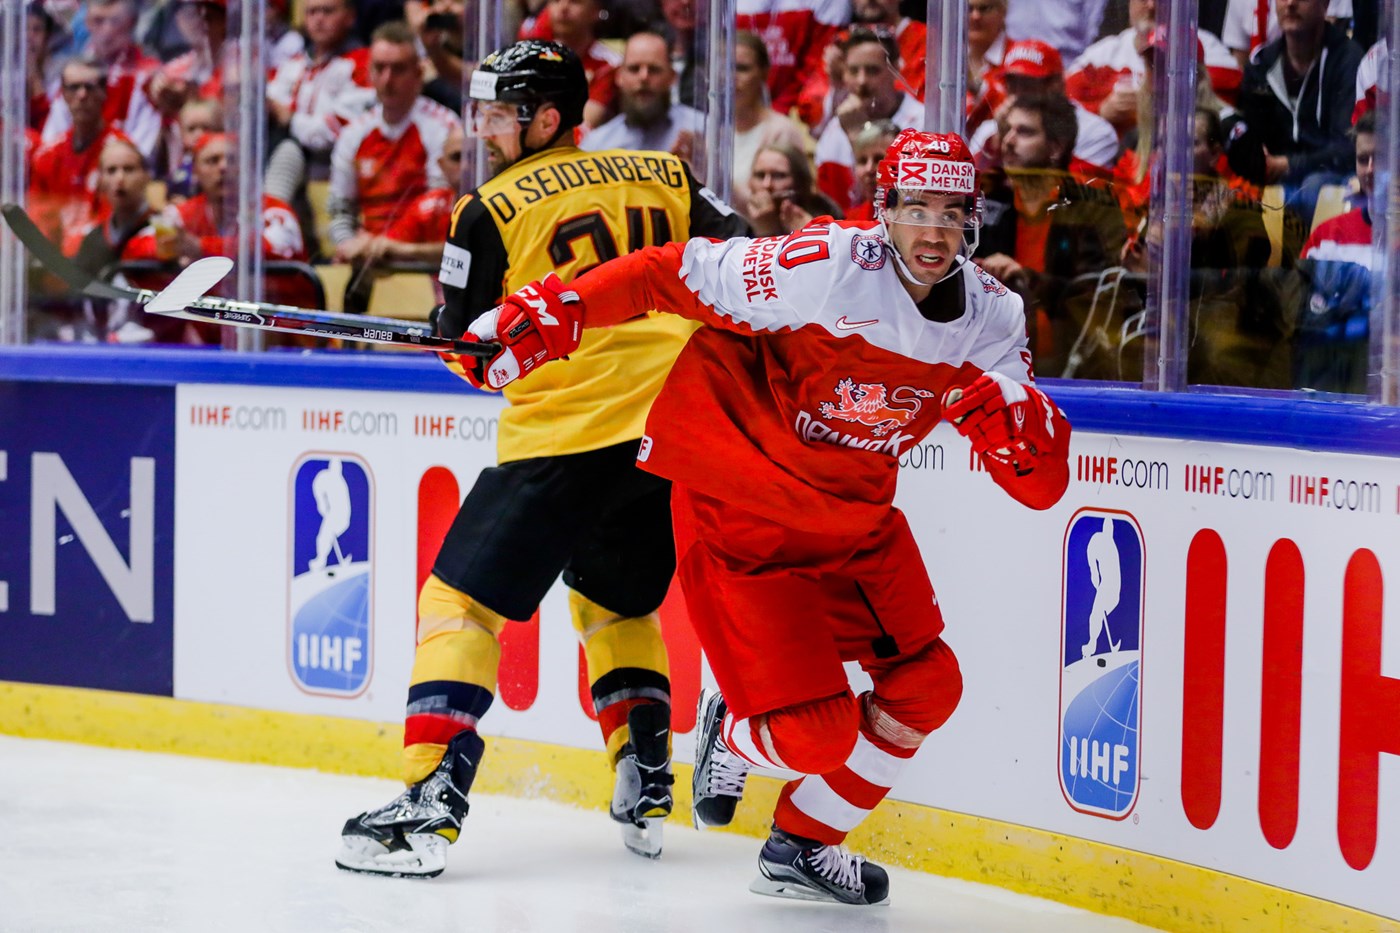 FOTO: Danmarks Ishockey Union